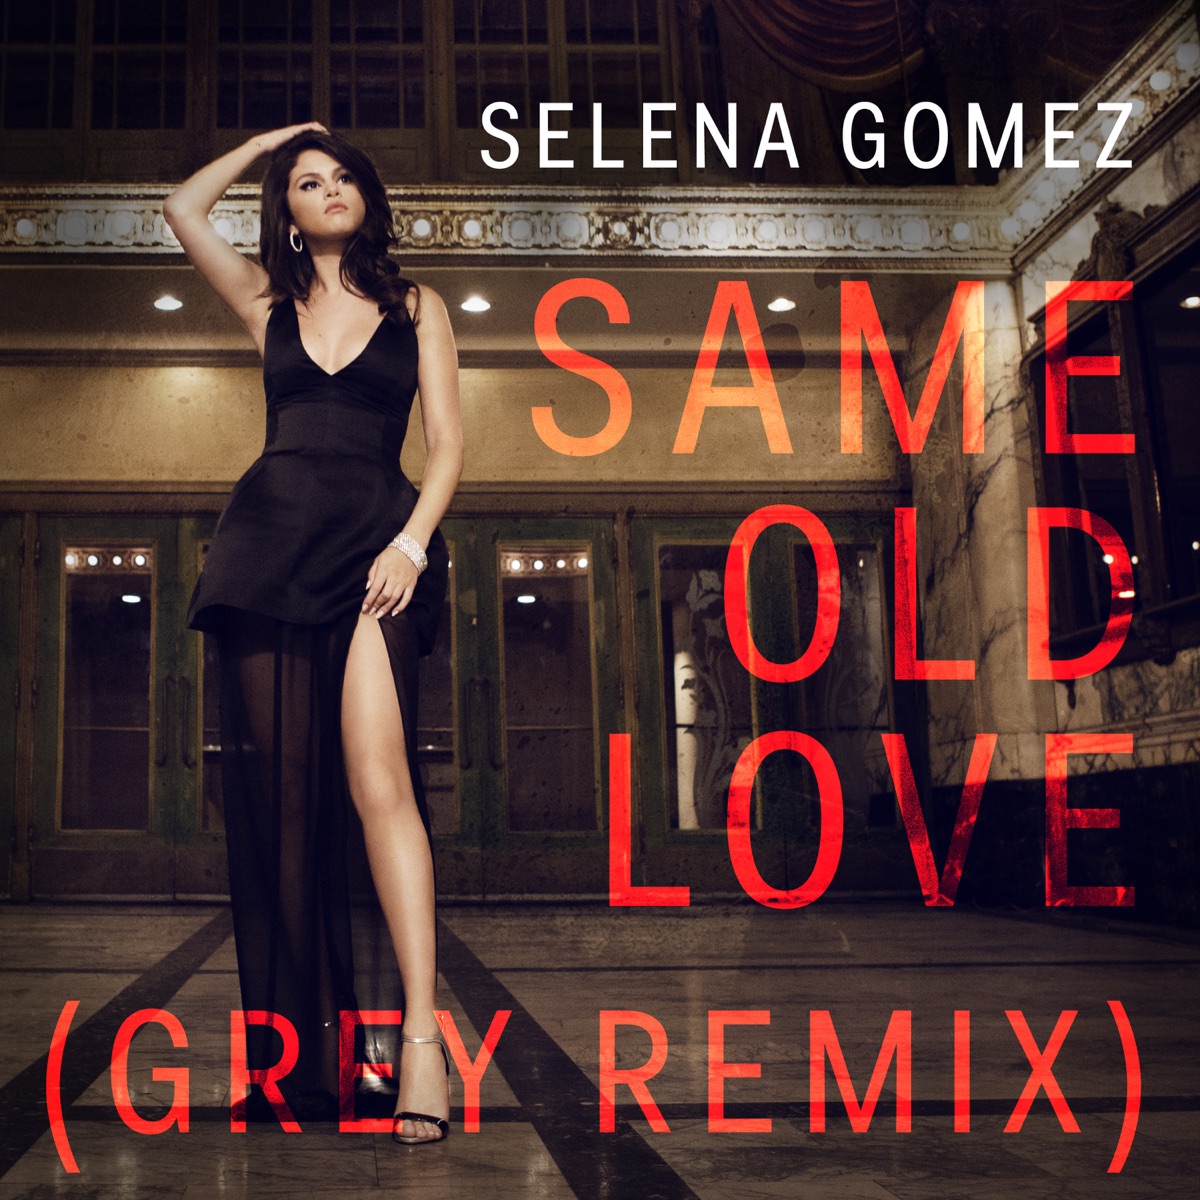 Same Old Love (Grey Remix) - Single by Selena Gomez on Apple Music